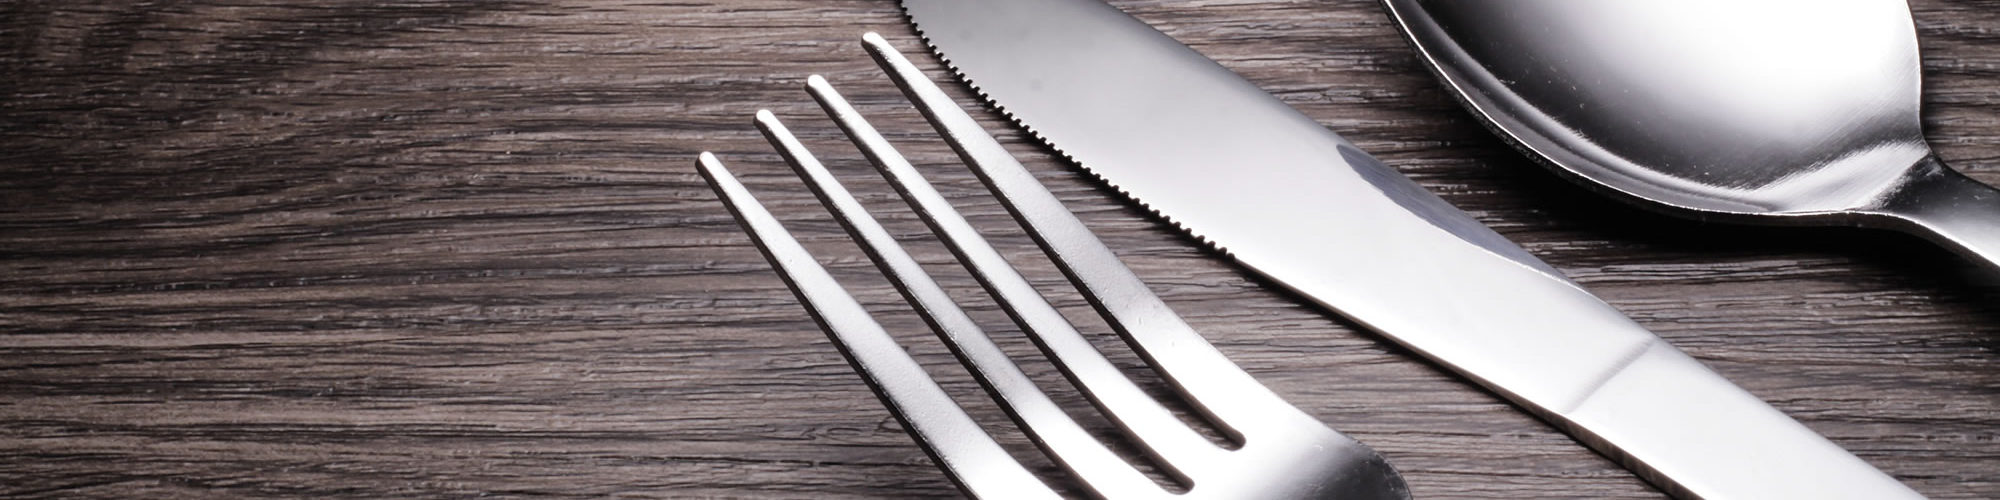 banner-cutlery